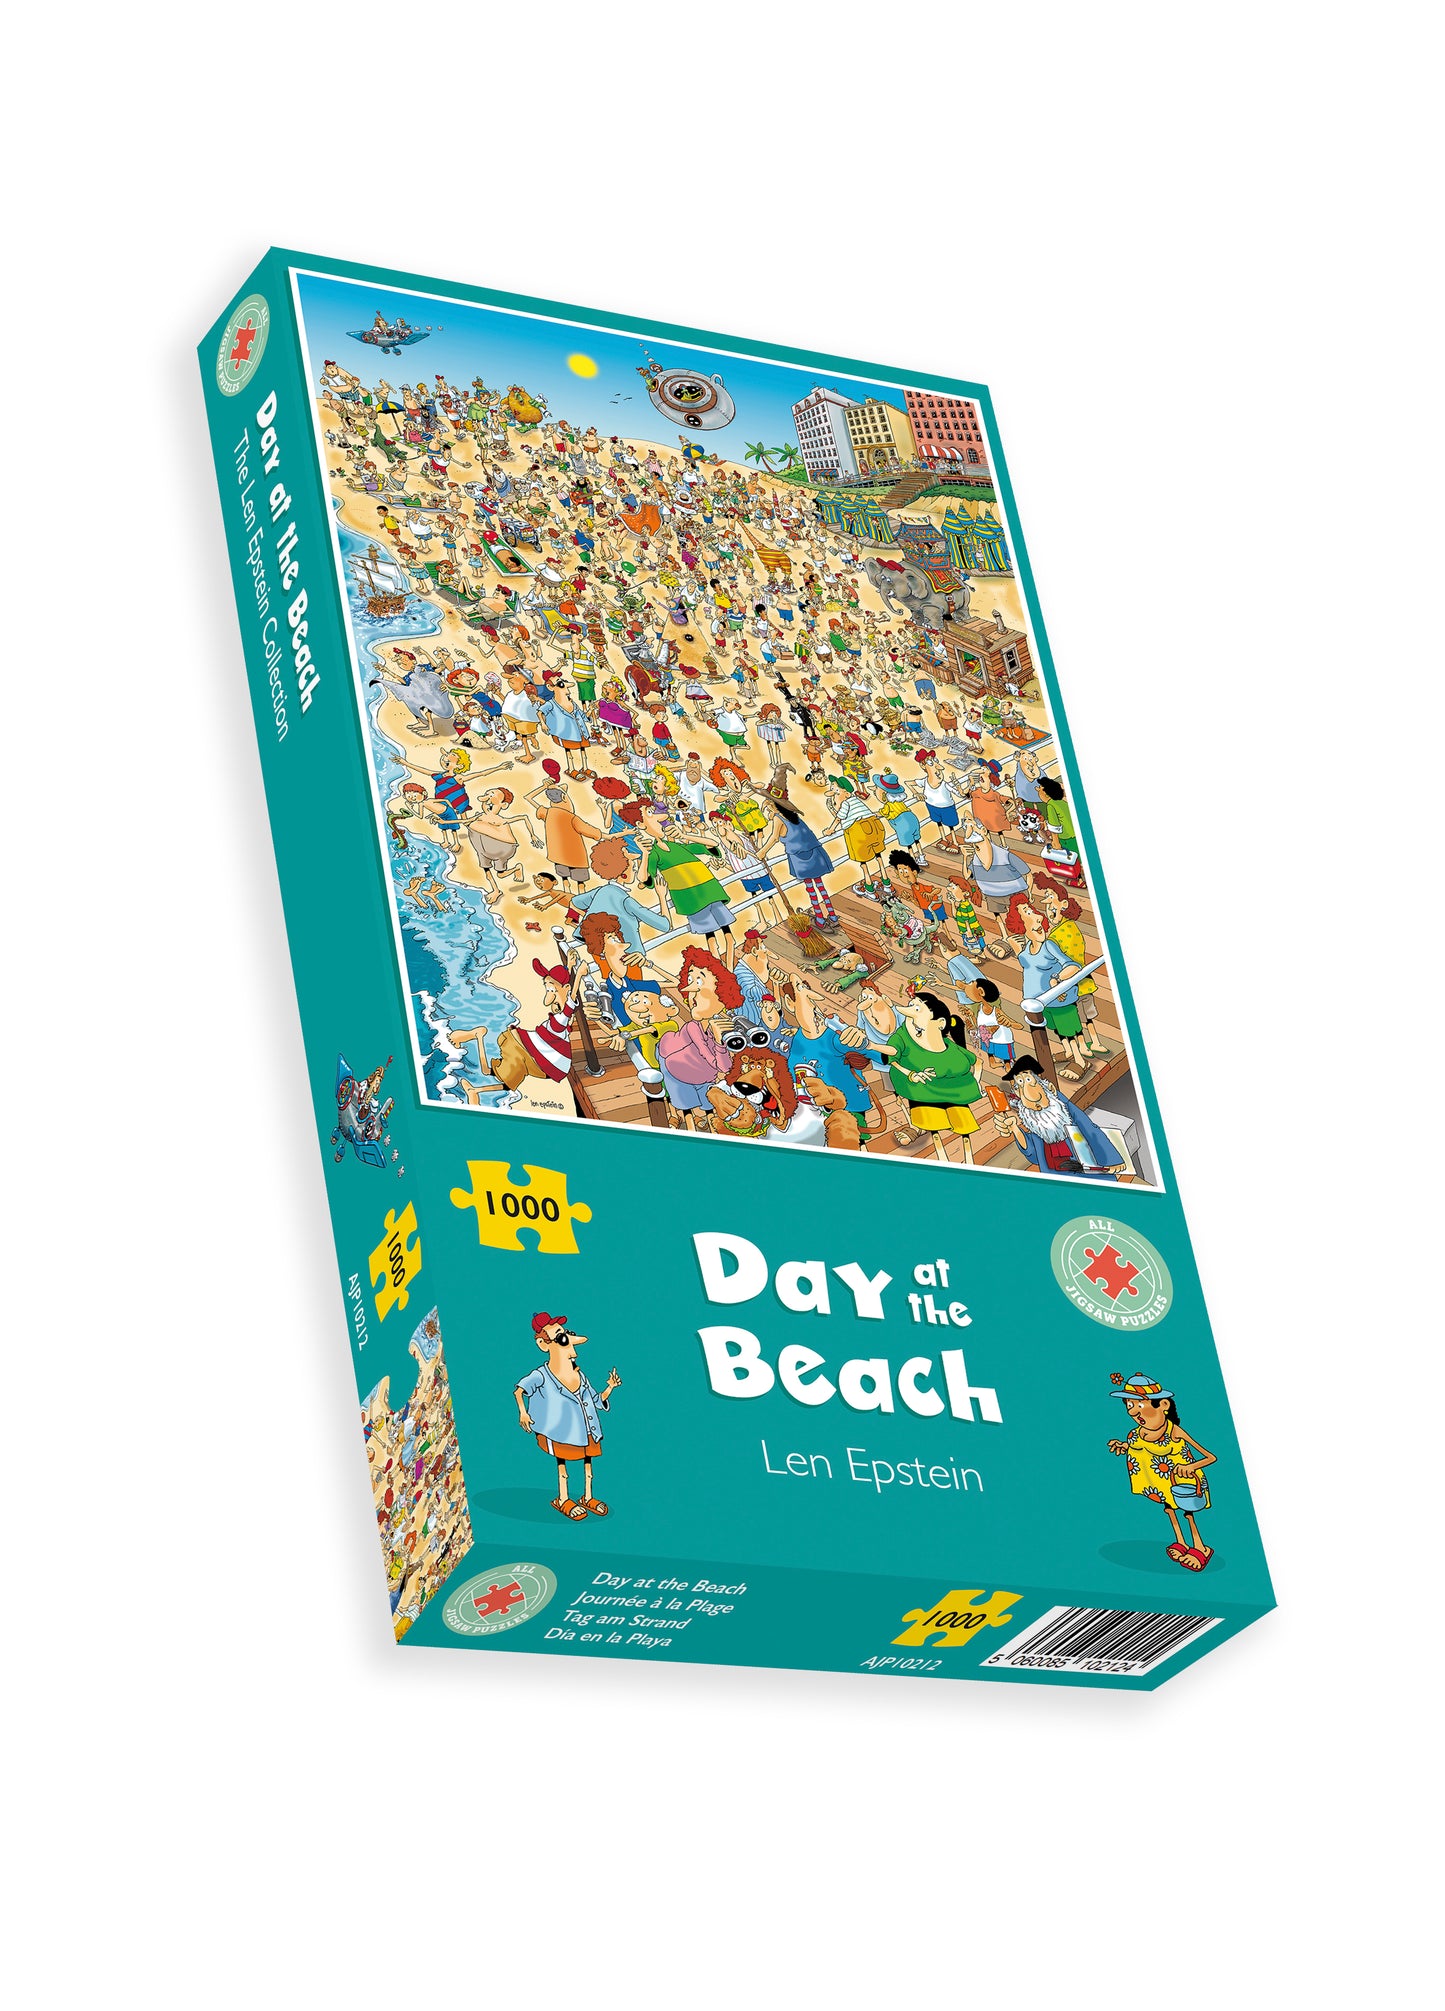 Day at the Beach - Len Epstein 1000 Piece Jigsaw Puzzle